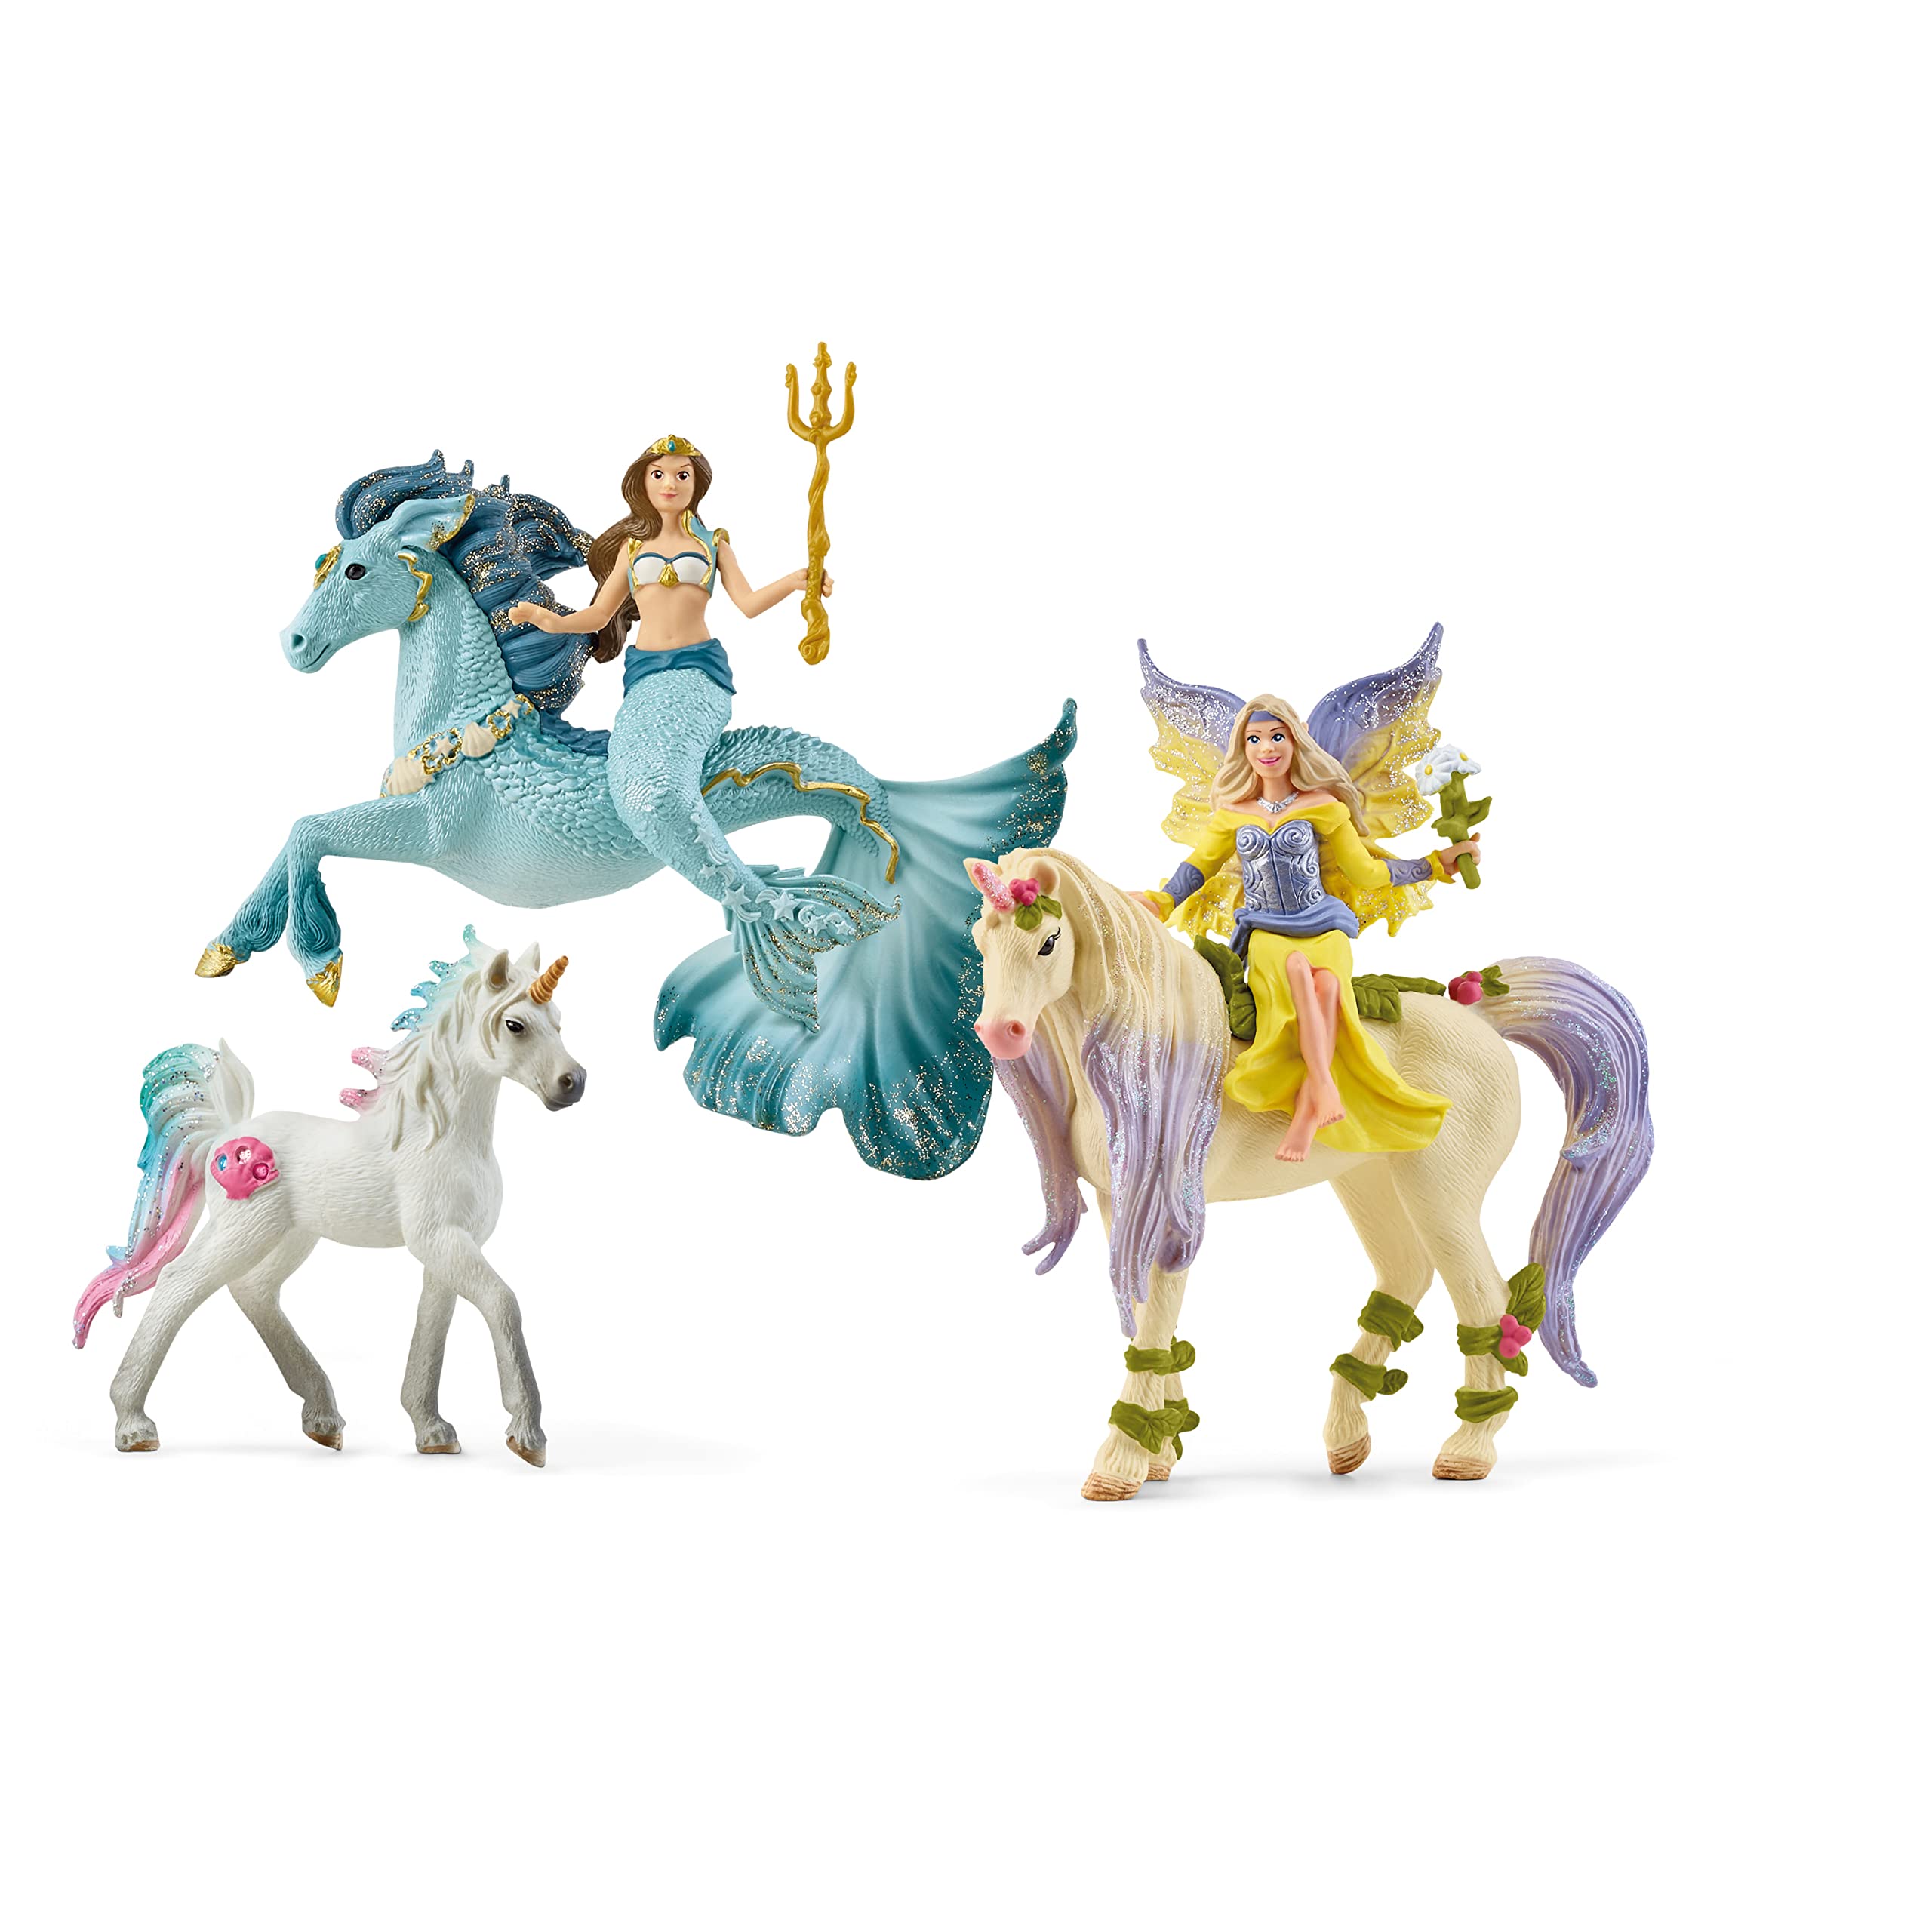 Schleich bayala, 5-Piece Starter Set with Fairy Feya, Mermaid Eyela, and Unicorn Toy Figurines, Ages 5+